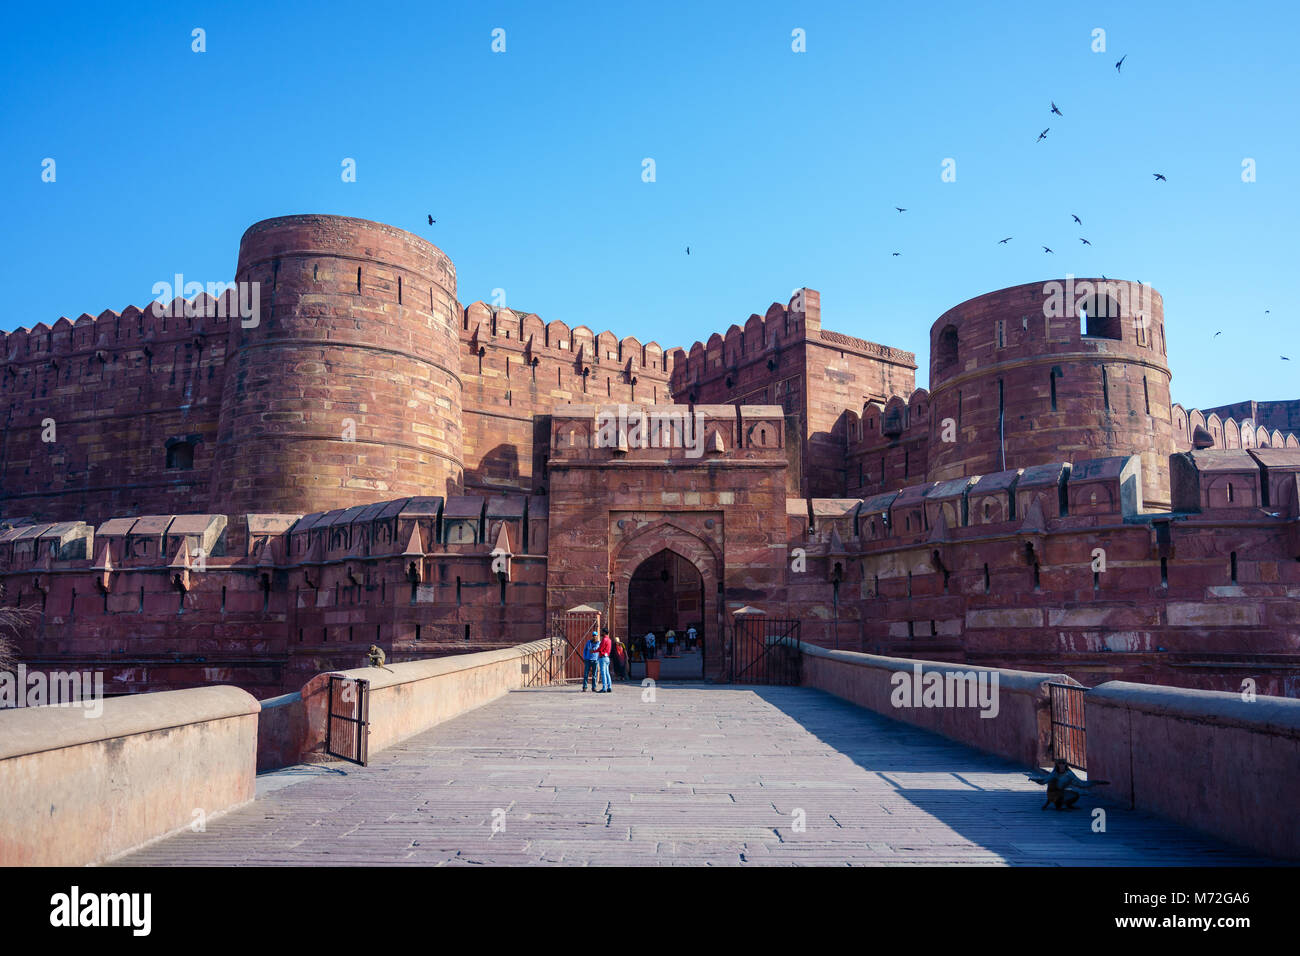 Lahore oder Amar Singh Gate des Agra Fort in Indien Stockfoto